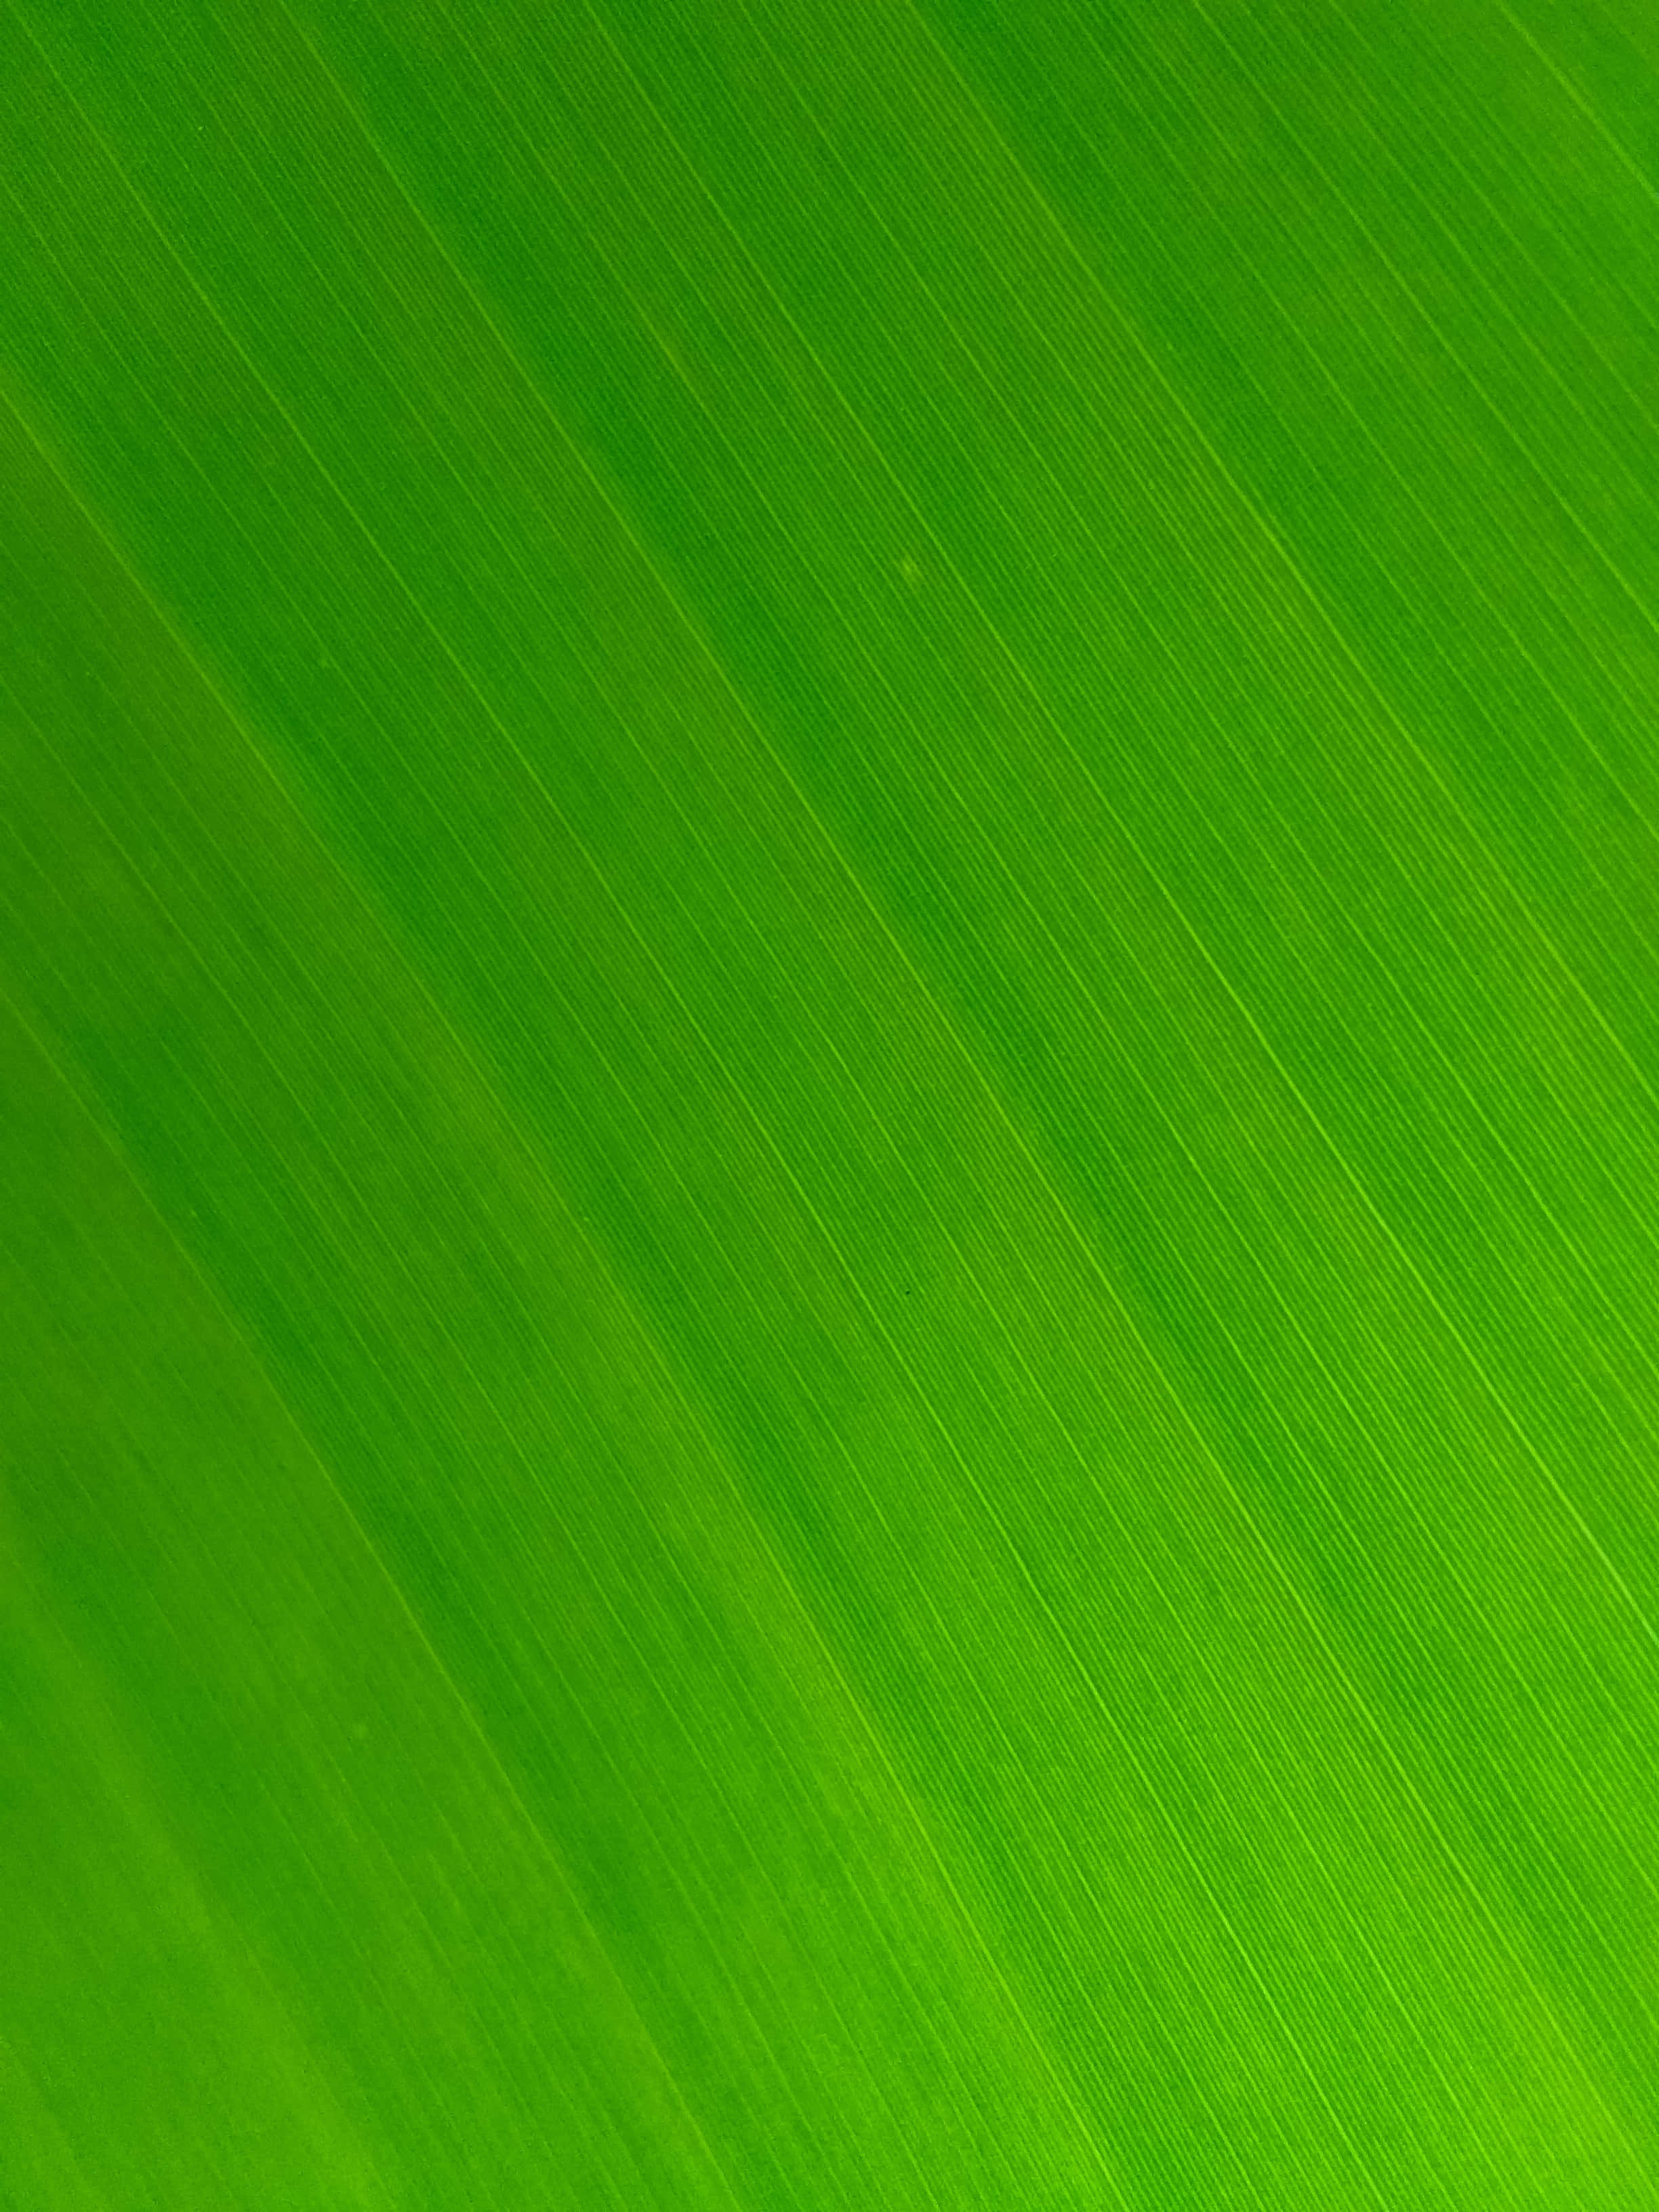 Green Banana Leaf Texture Background